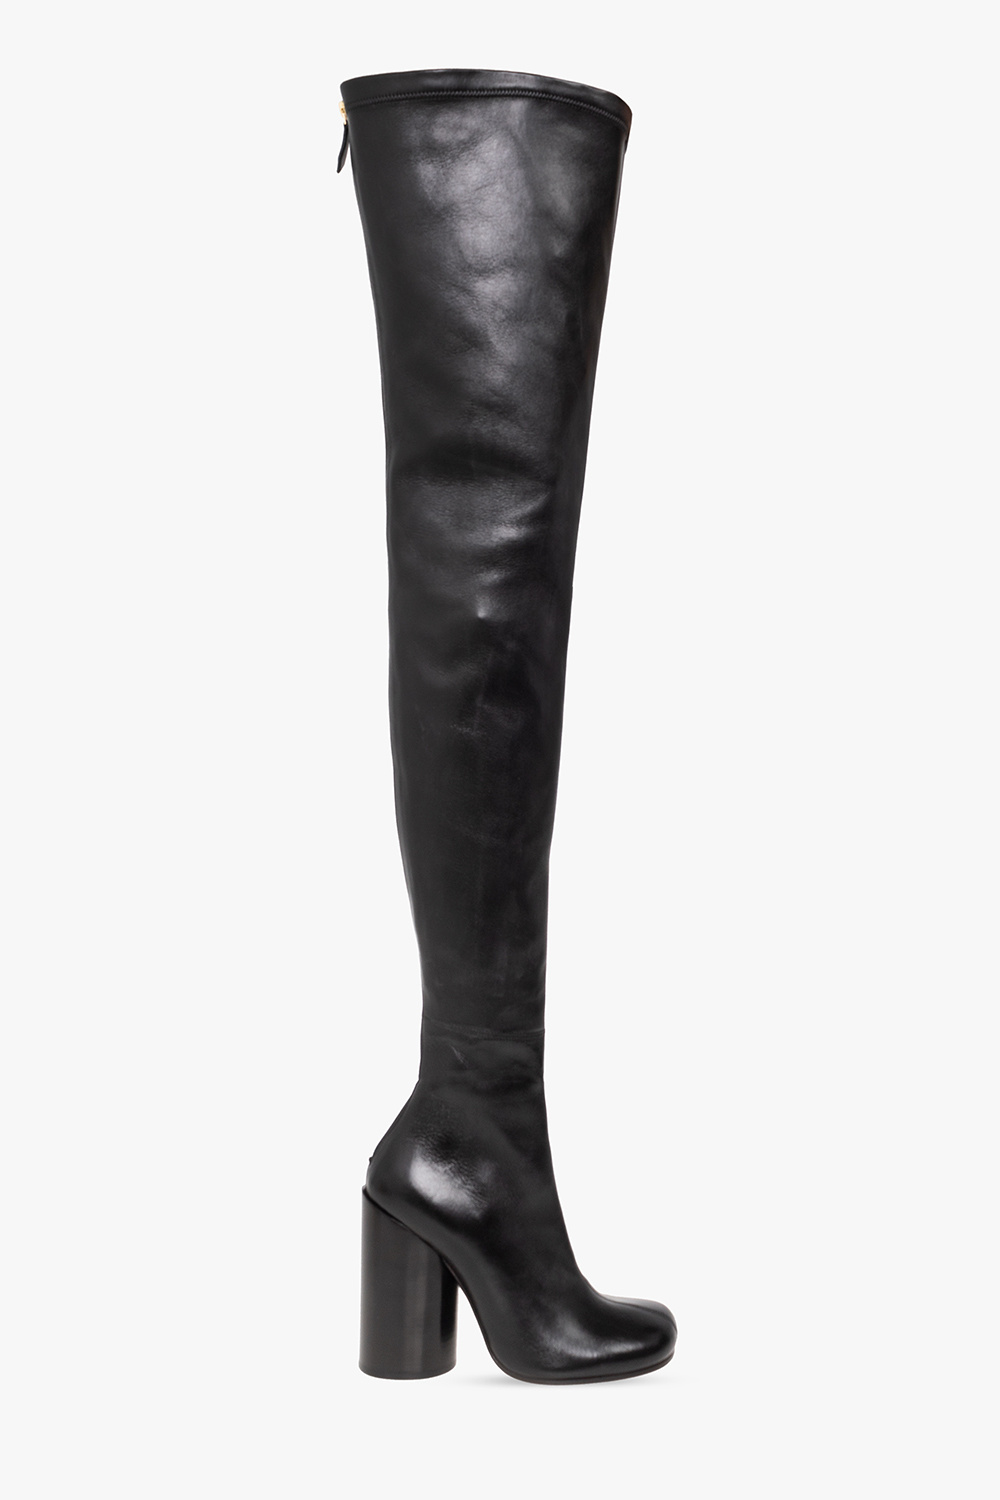 Burberry ‘Anita’ heeled high boots